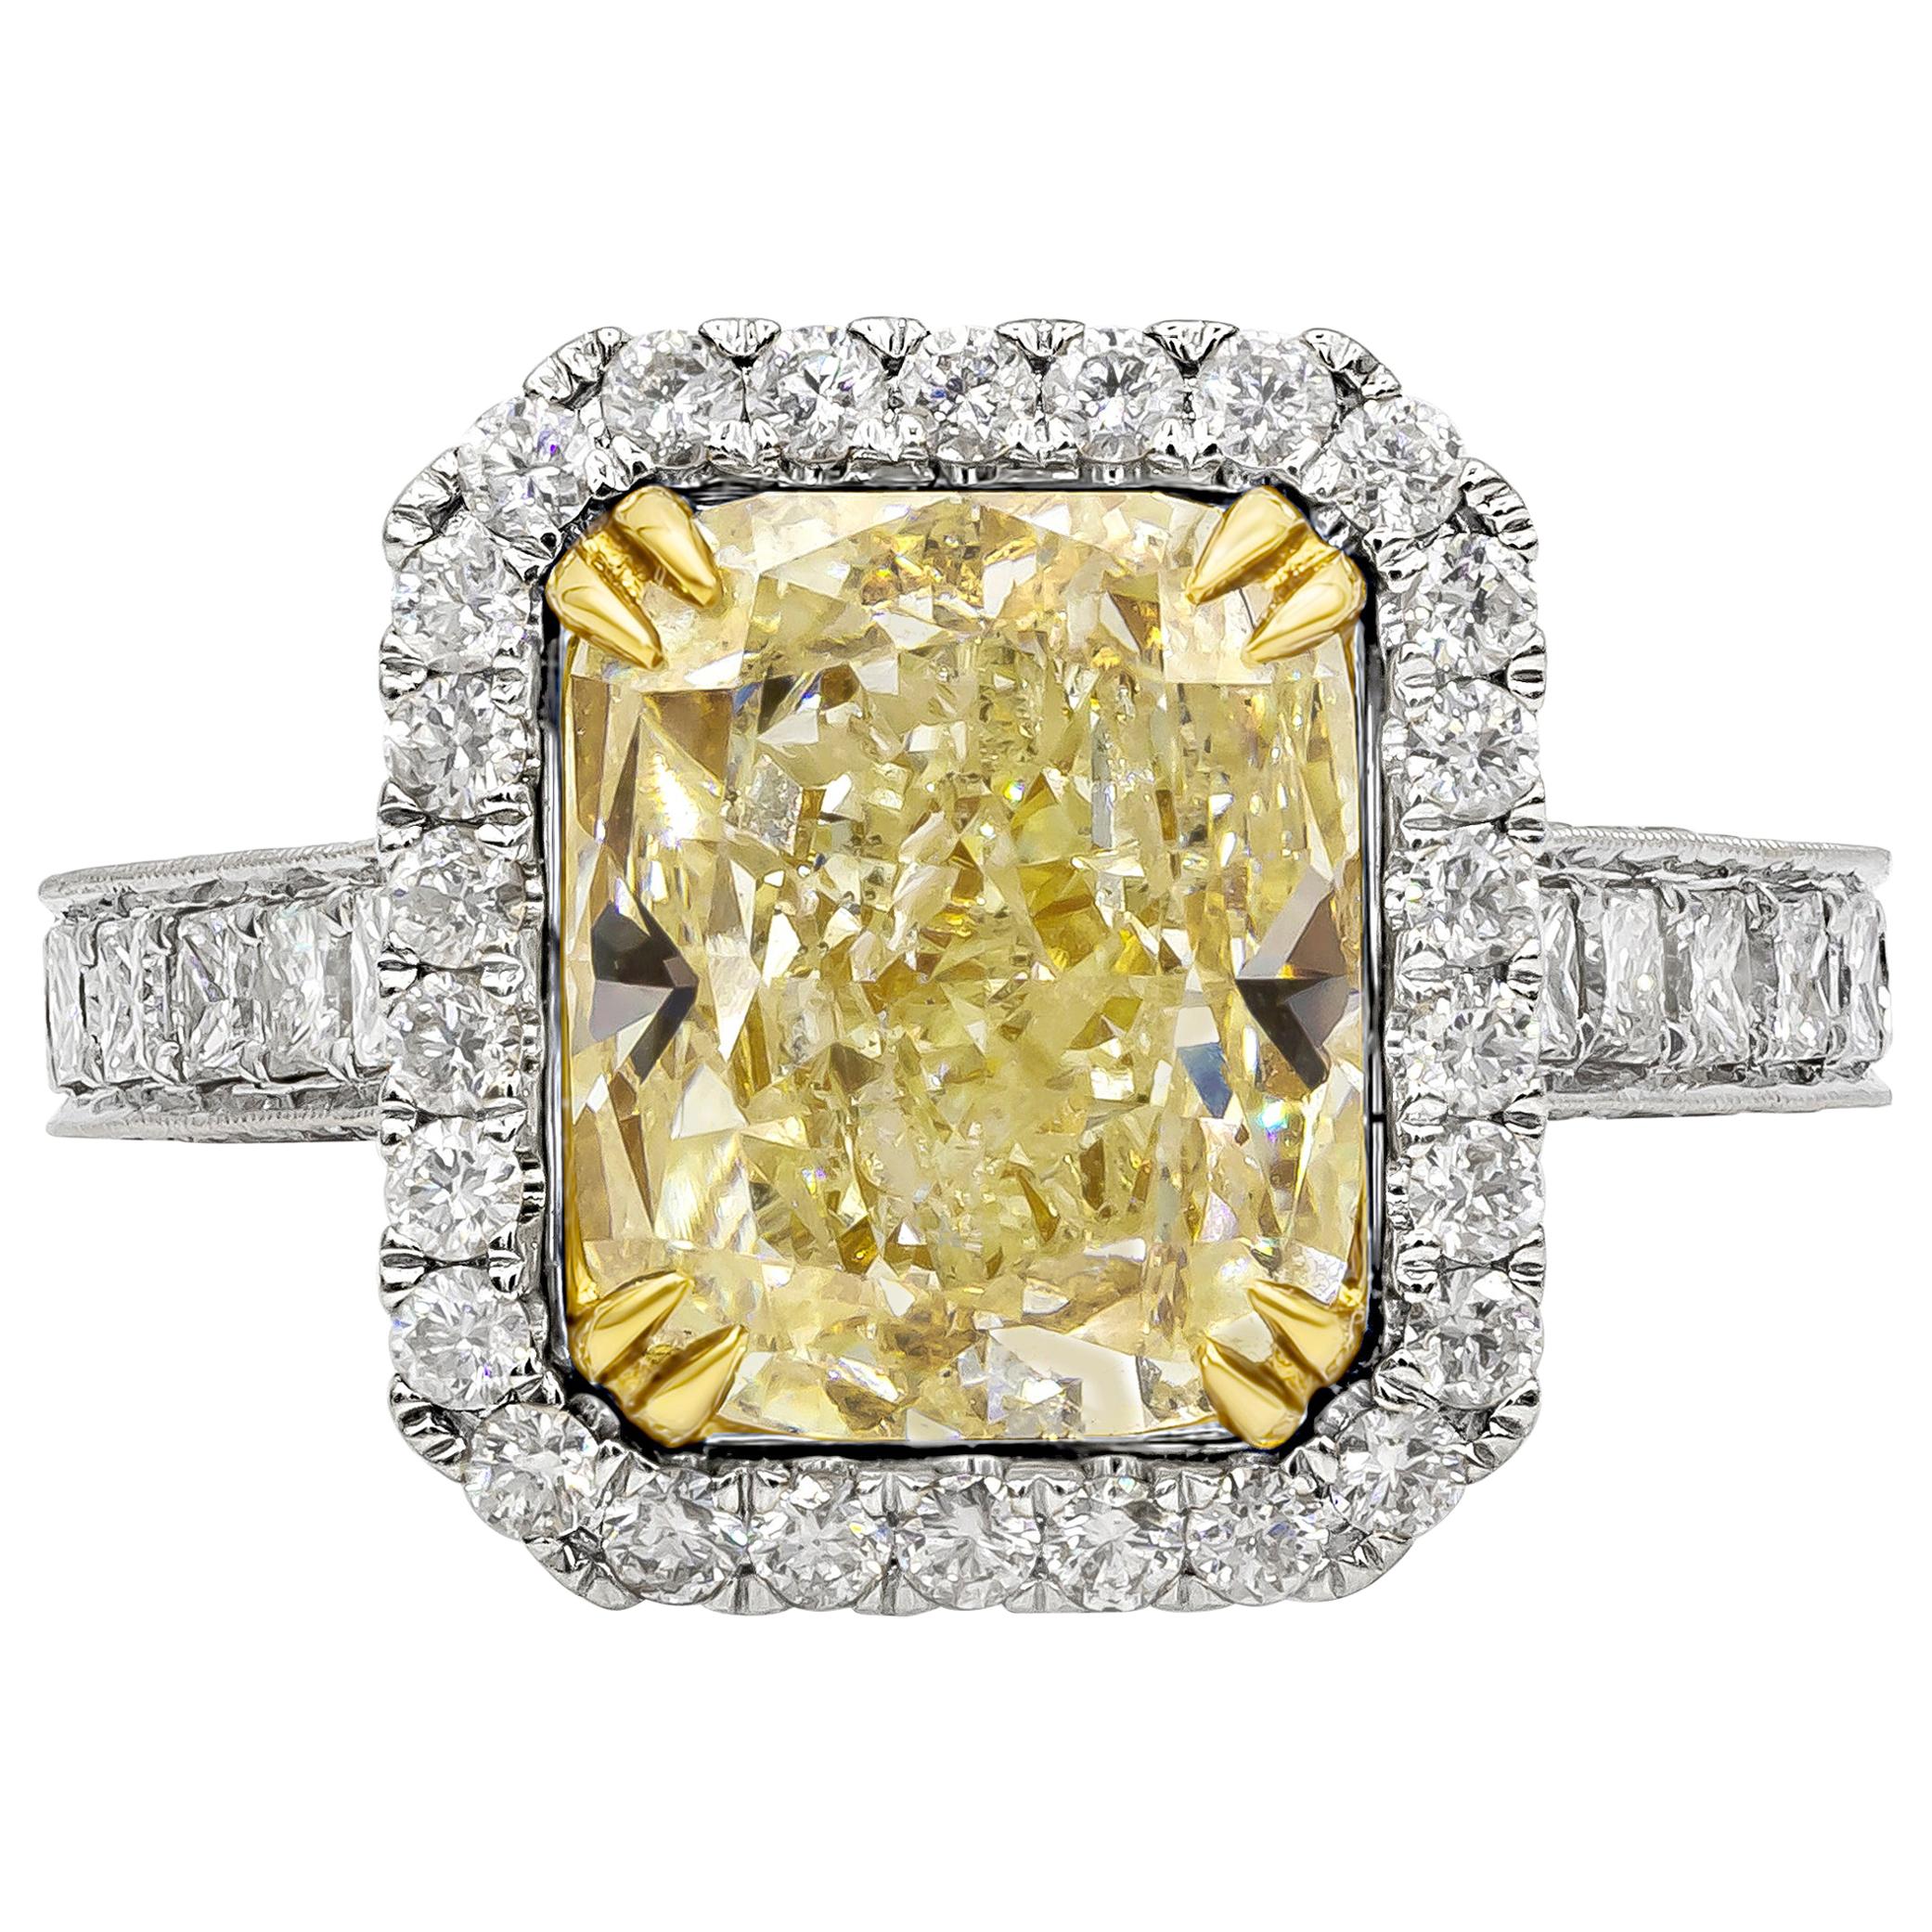 EGL USA Certified 5.07 Carats Cushion Cut Yellow Diamond Halo Engagement Ring